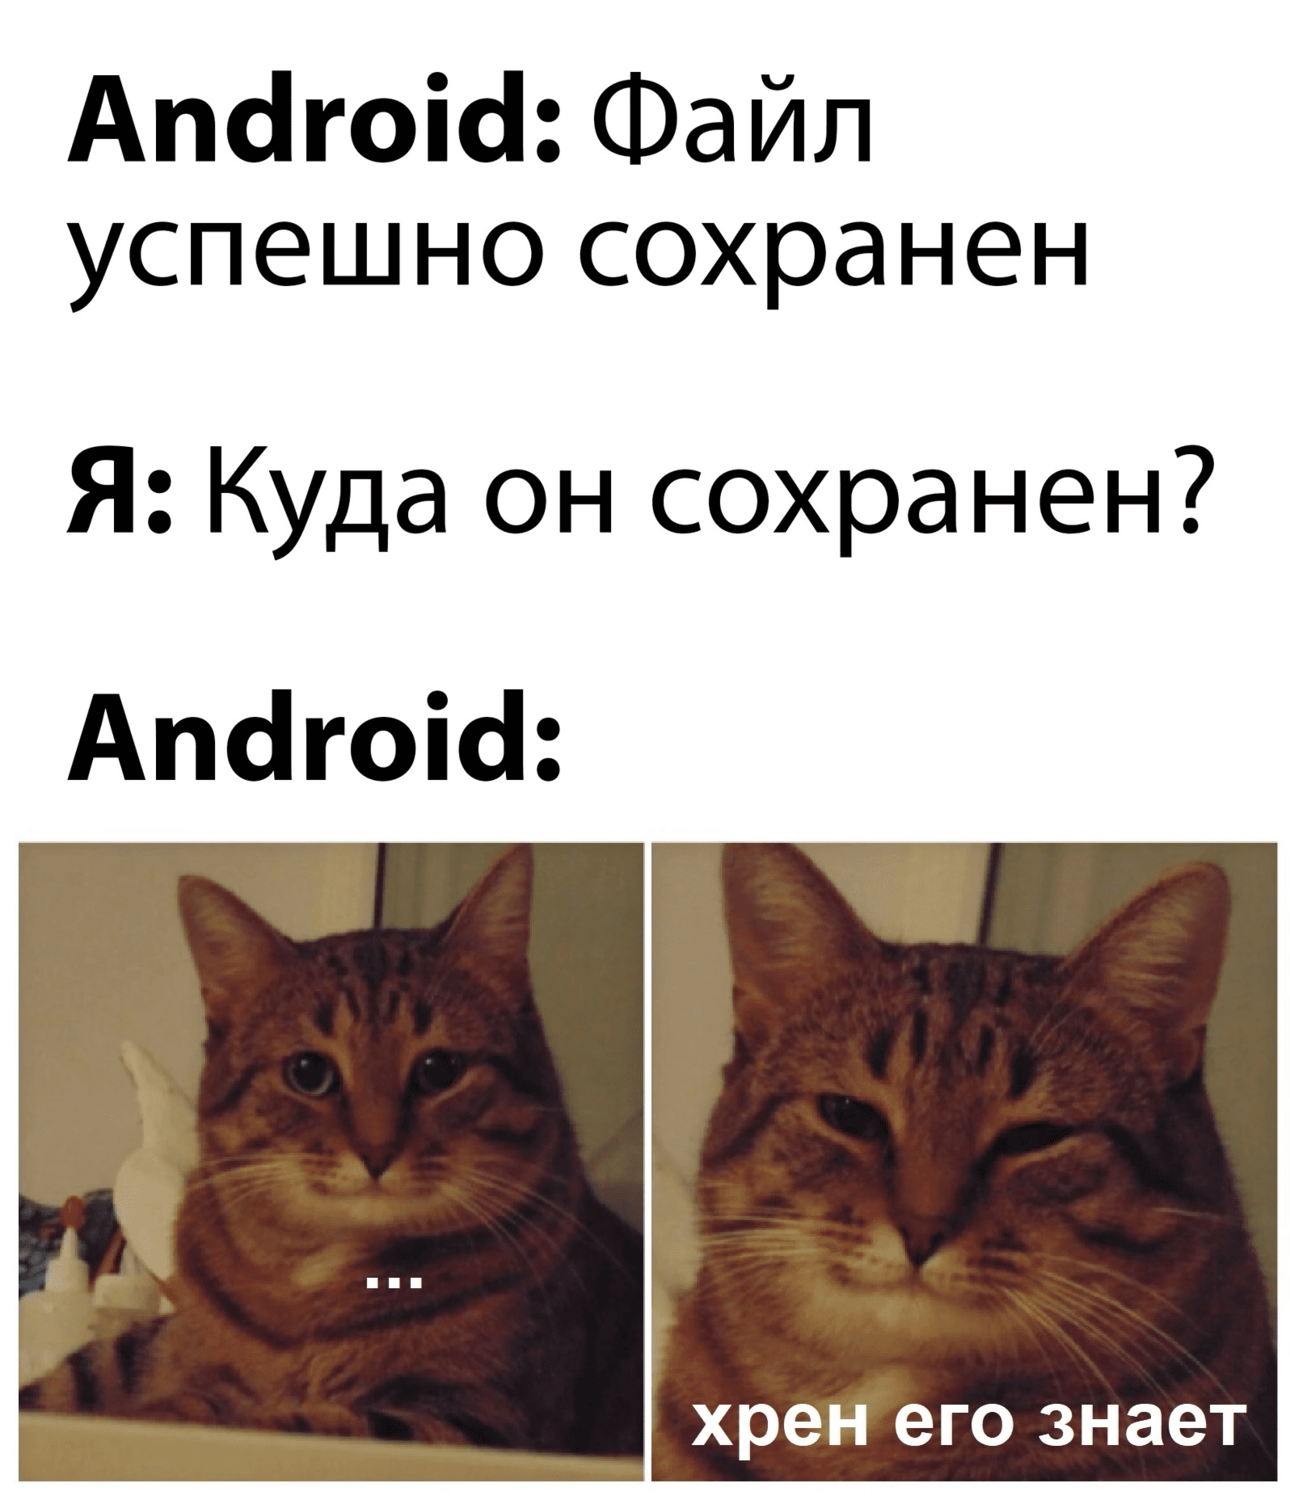 Android: Файл успешно сохранён.
Я: Куда он сохранен?
Android: А хрен его знает...